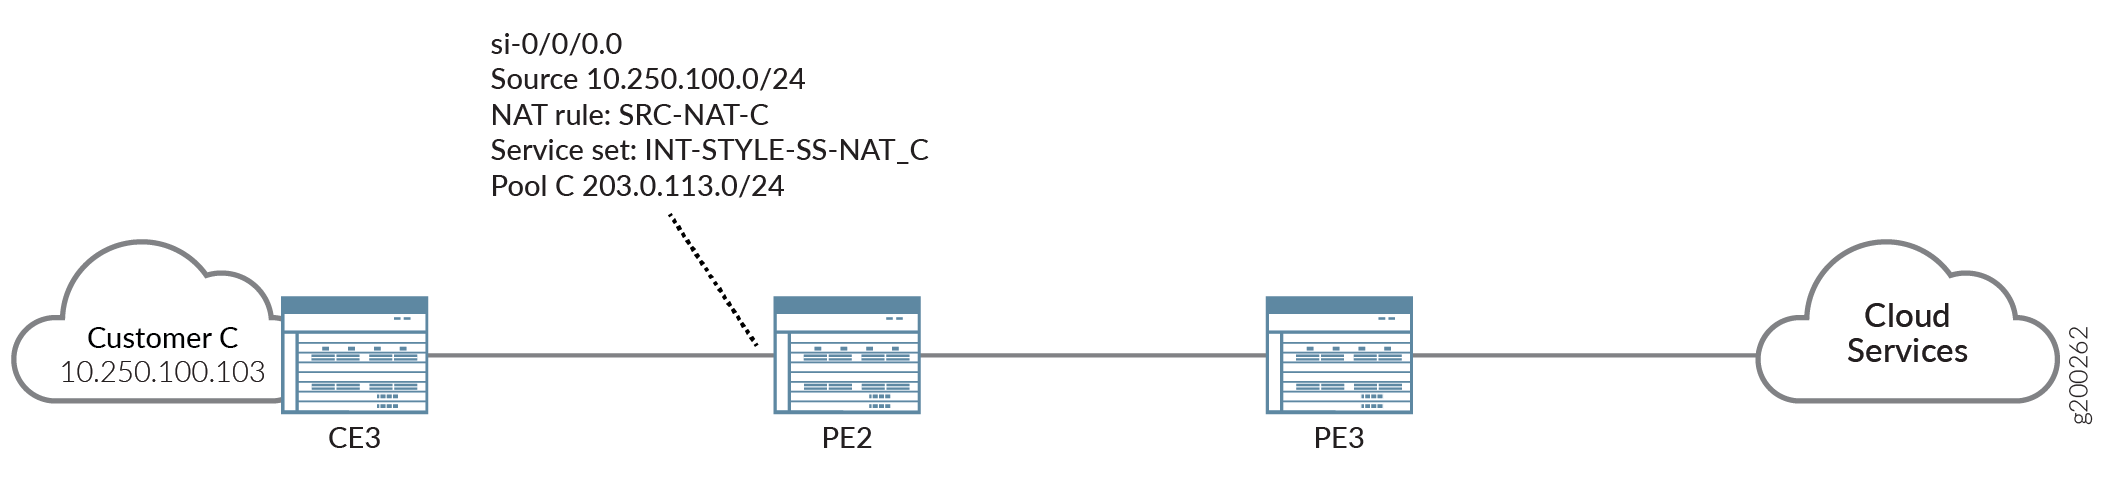 Interface-Style NAT Configuration